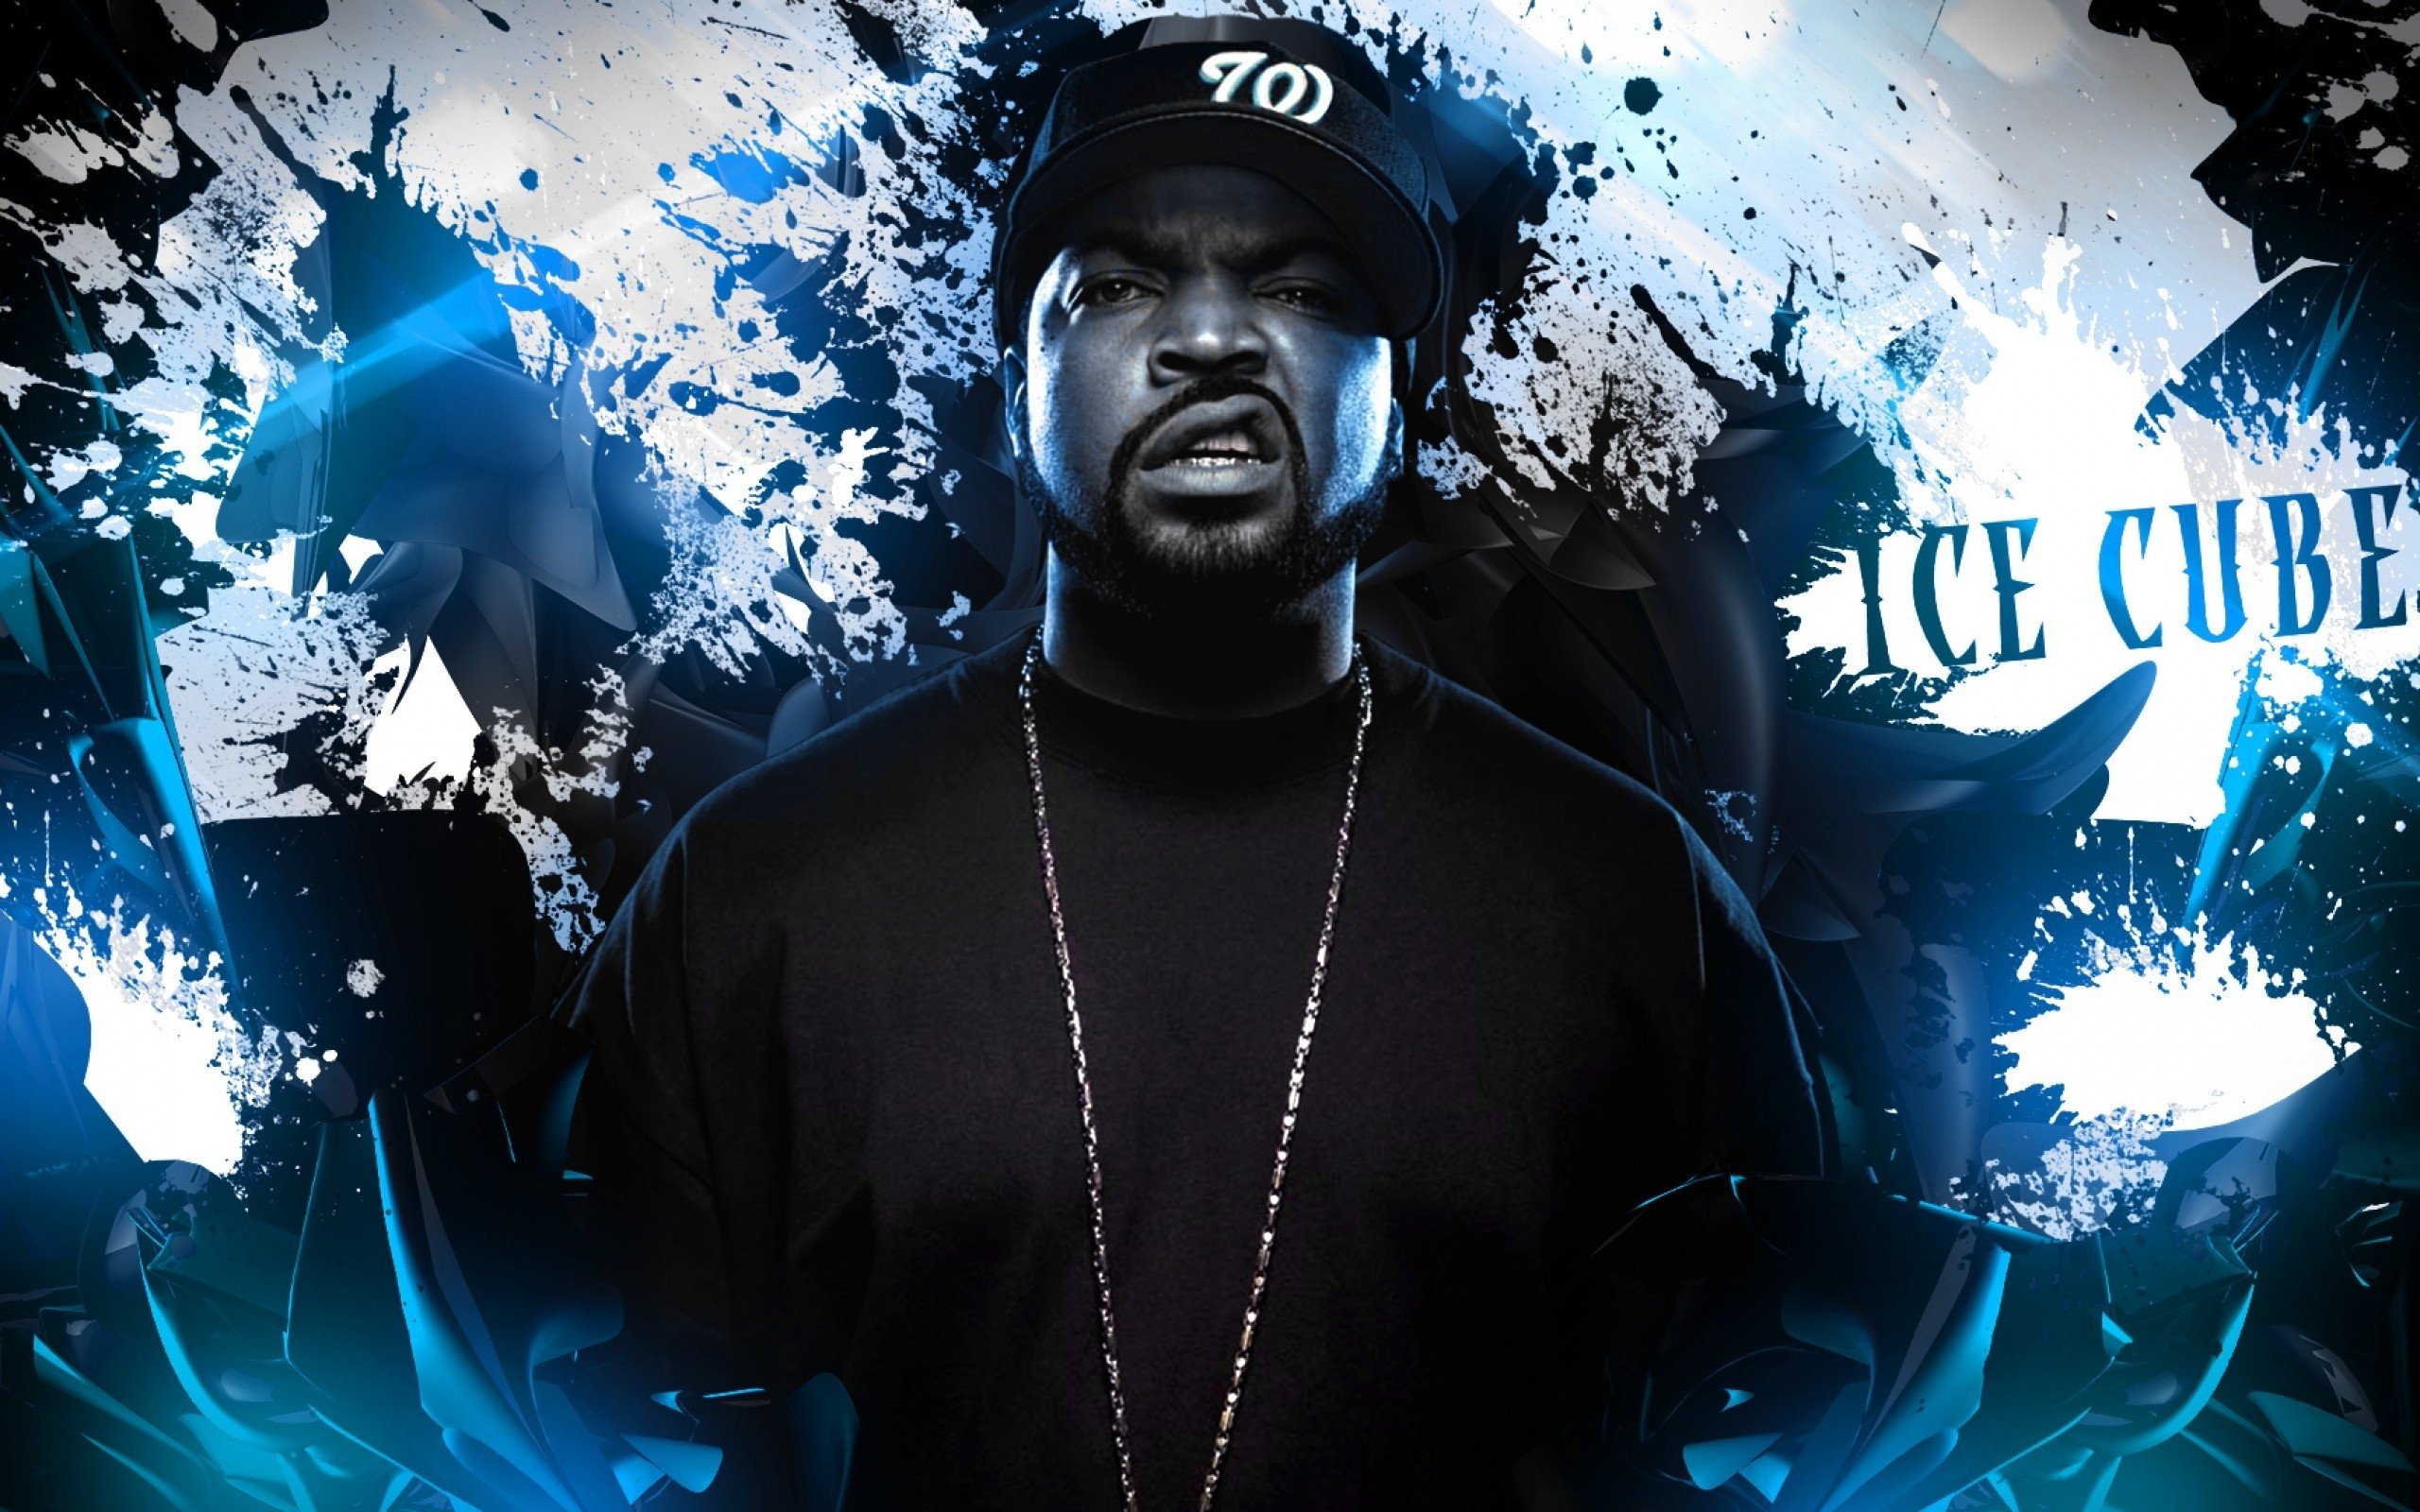 Ice cube me. Ice Cube рэпер. Ice Cube 2pac. Айс Кьюб гангста рэп. Ice Cube гангста-РЭПЕРЫ.